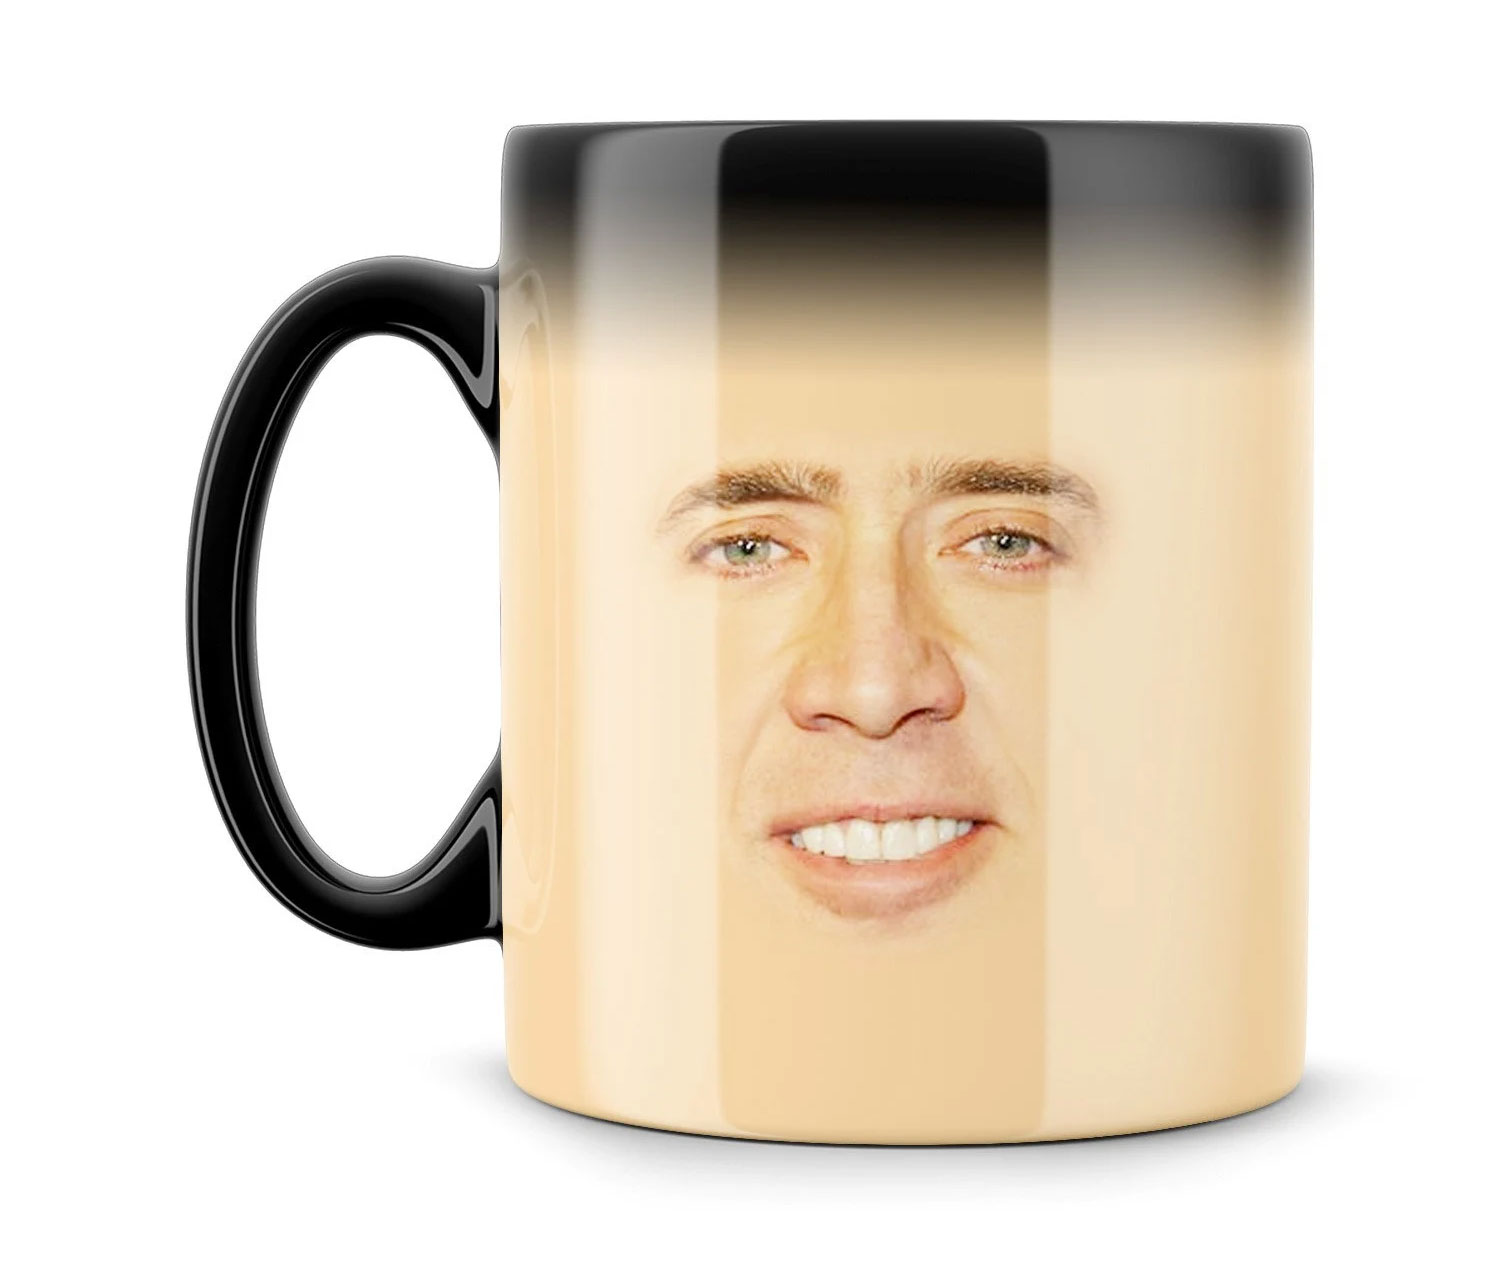 Nicolas Cage Face Mug Appears with hot liquid